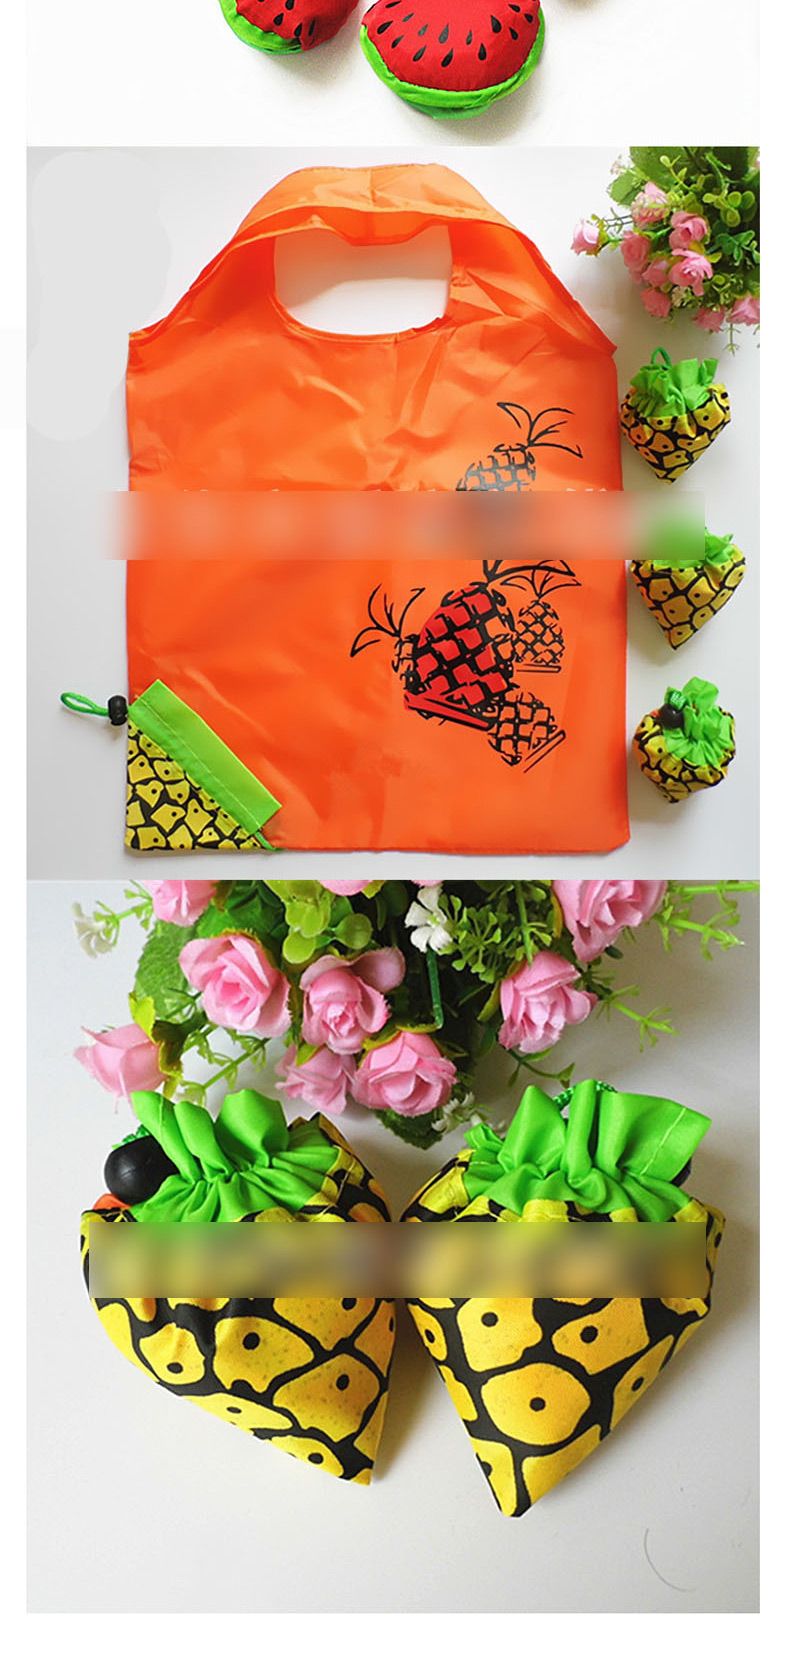 Fashion Pineapple Polyester Folded Fruit Green Bag Shopping Bag,Handbags